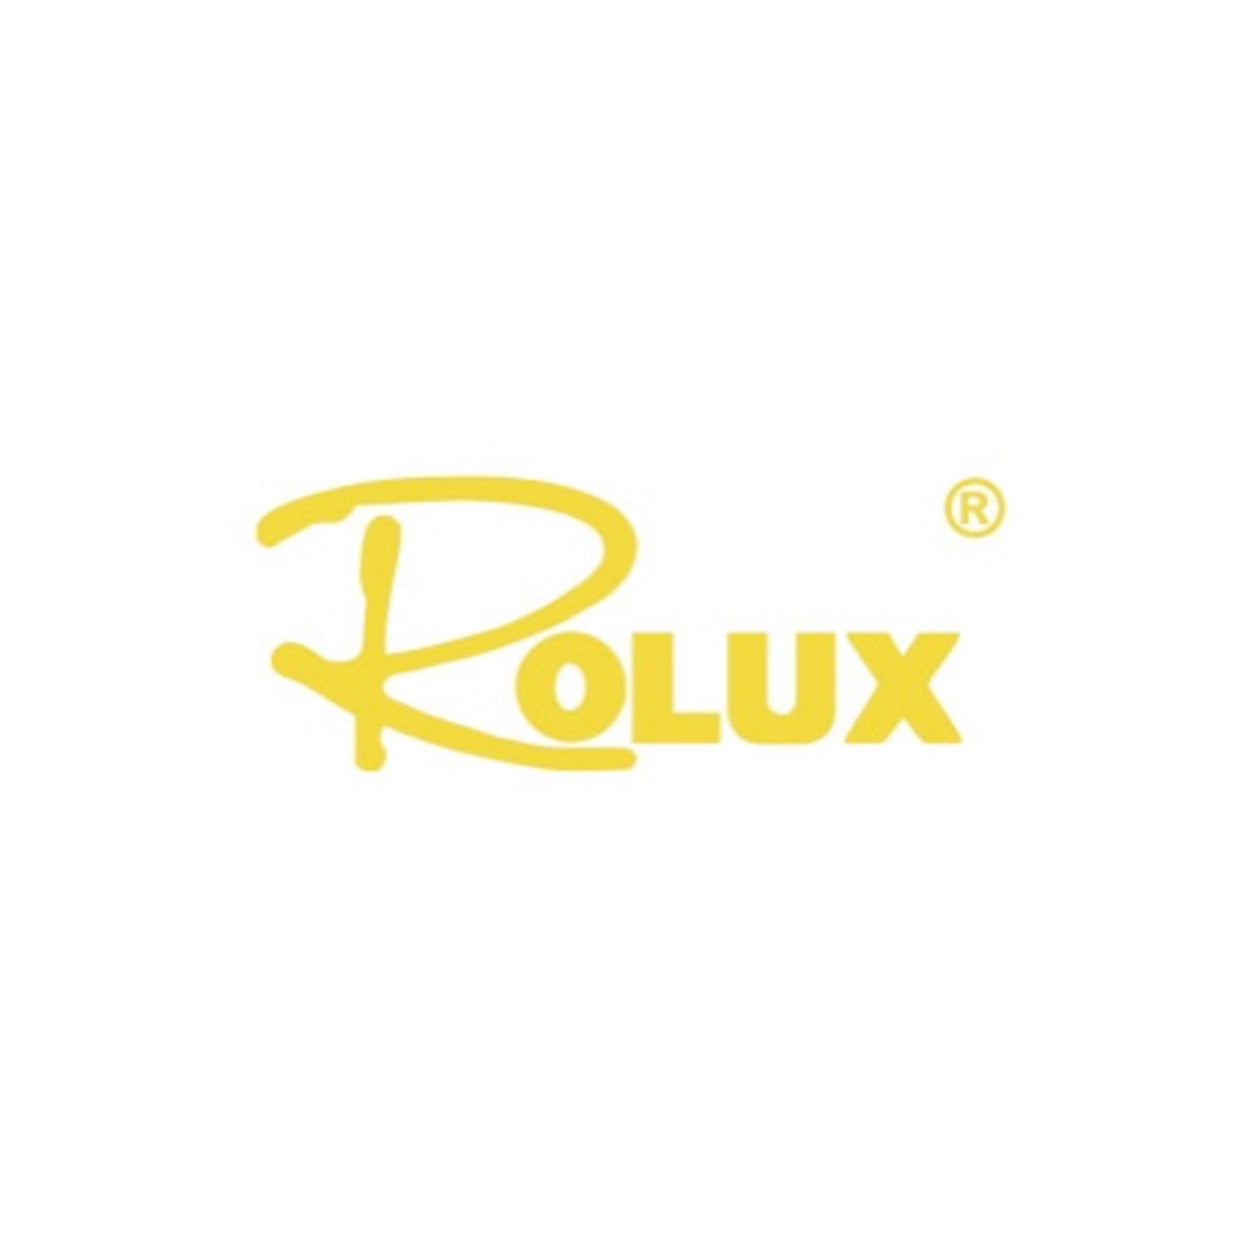 Rolux